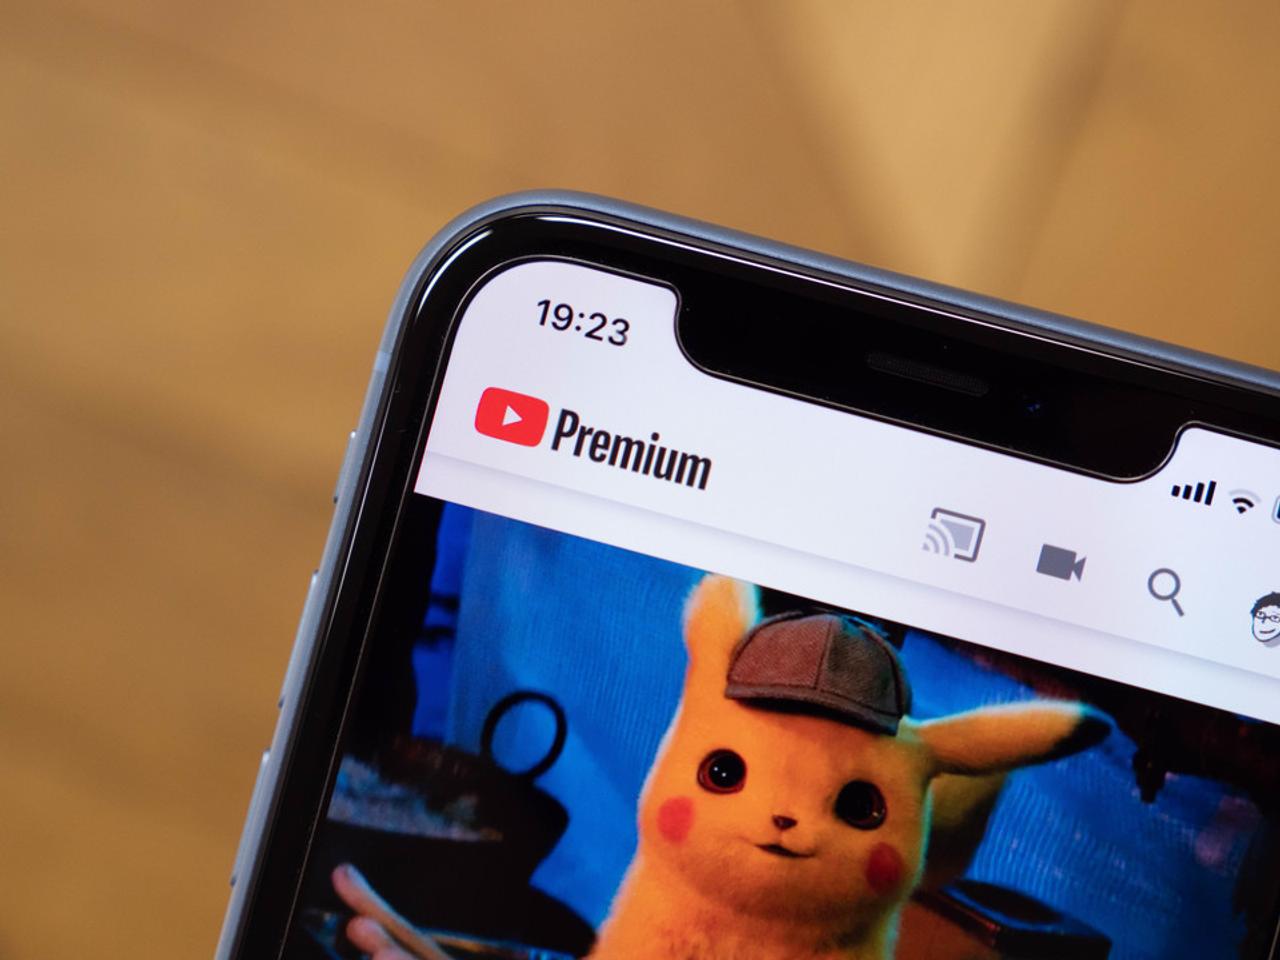 Xデー間近。｢YouTube Premium｣続けますか？